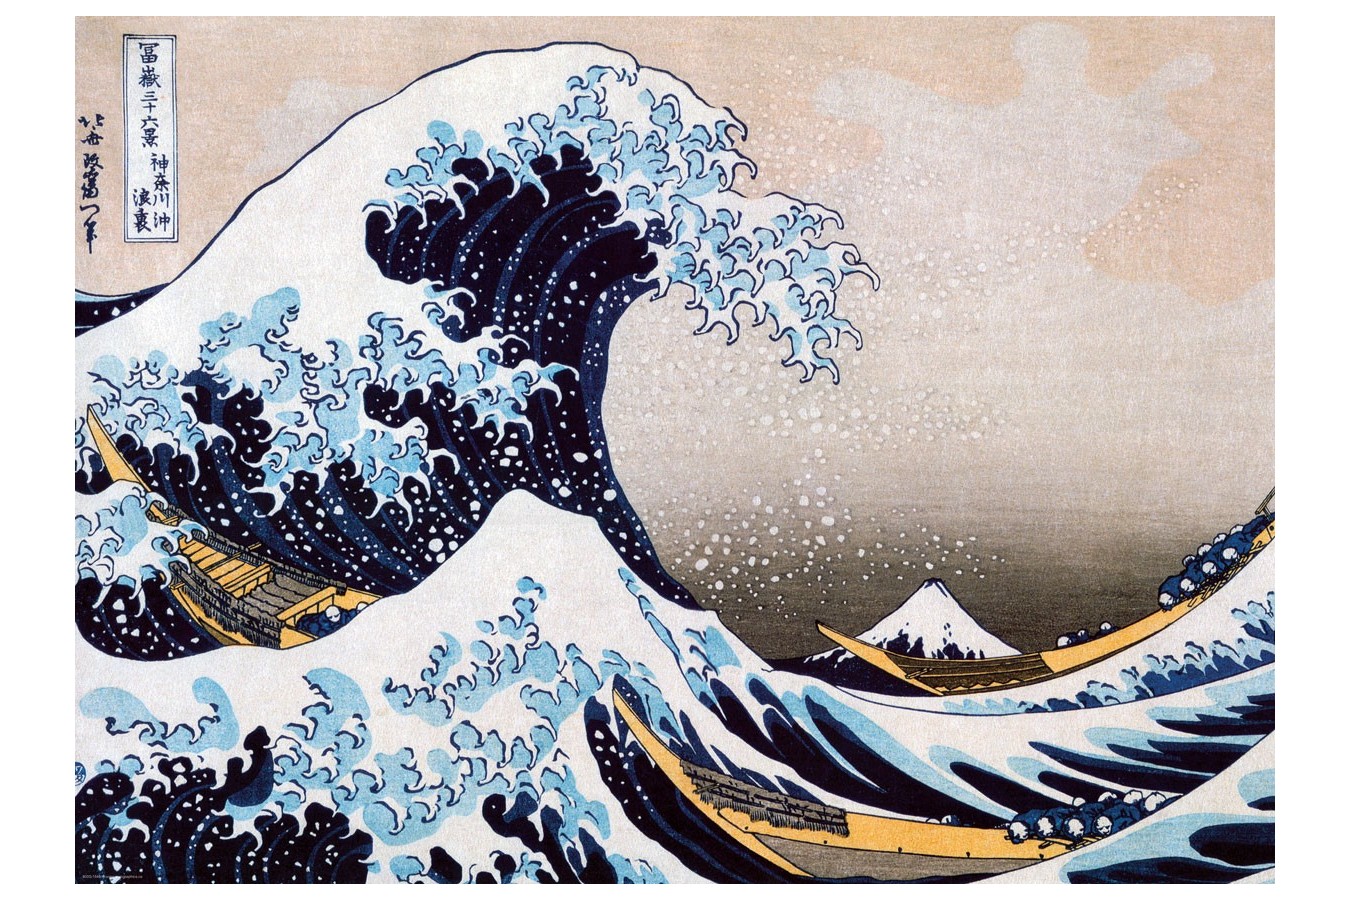 Puzzle Eurographics - Katsushika Hokusai: Super Welle in Kanagawa, 1000 piese (6000-1545)